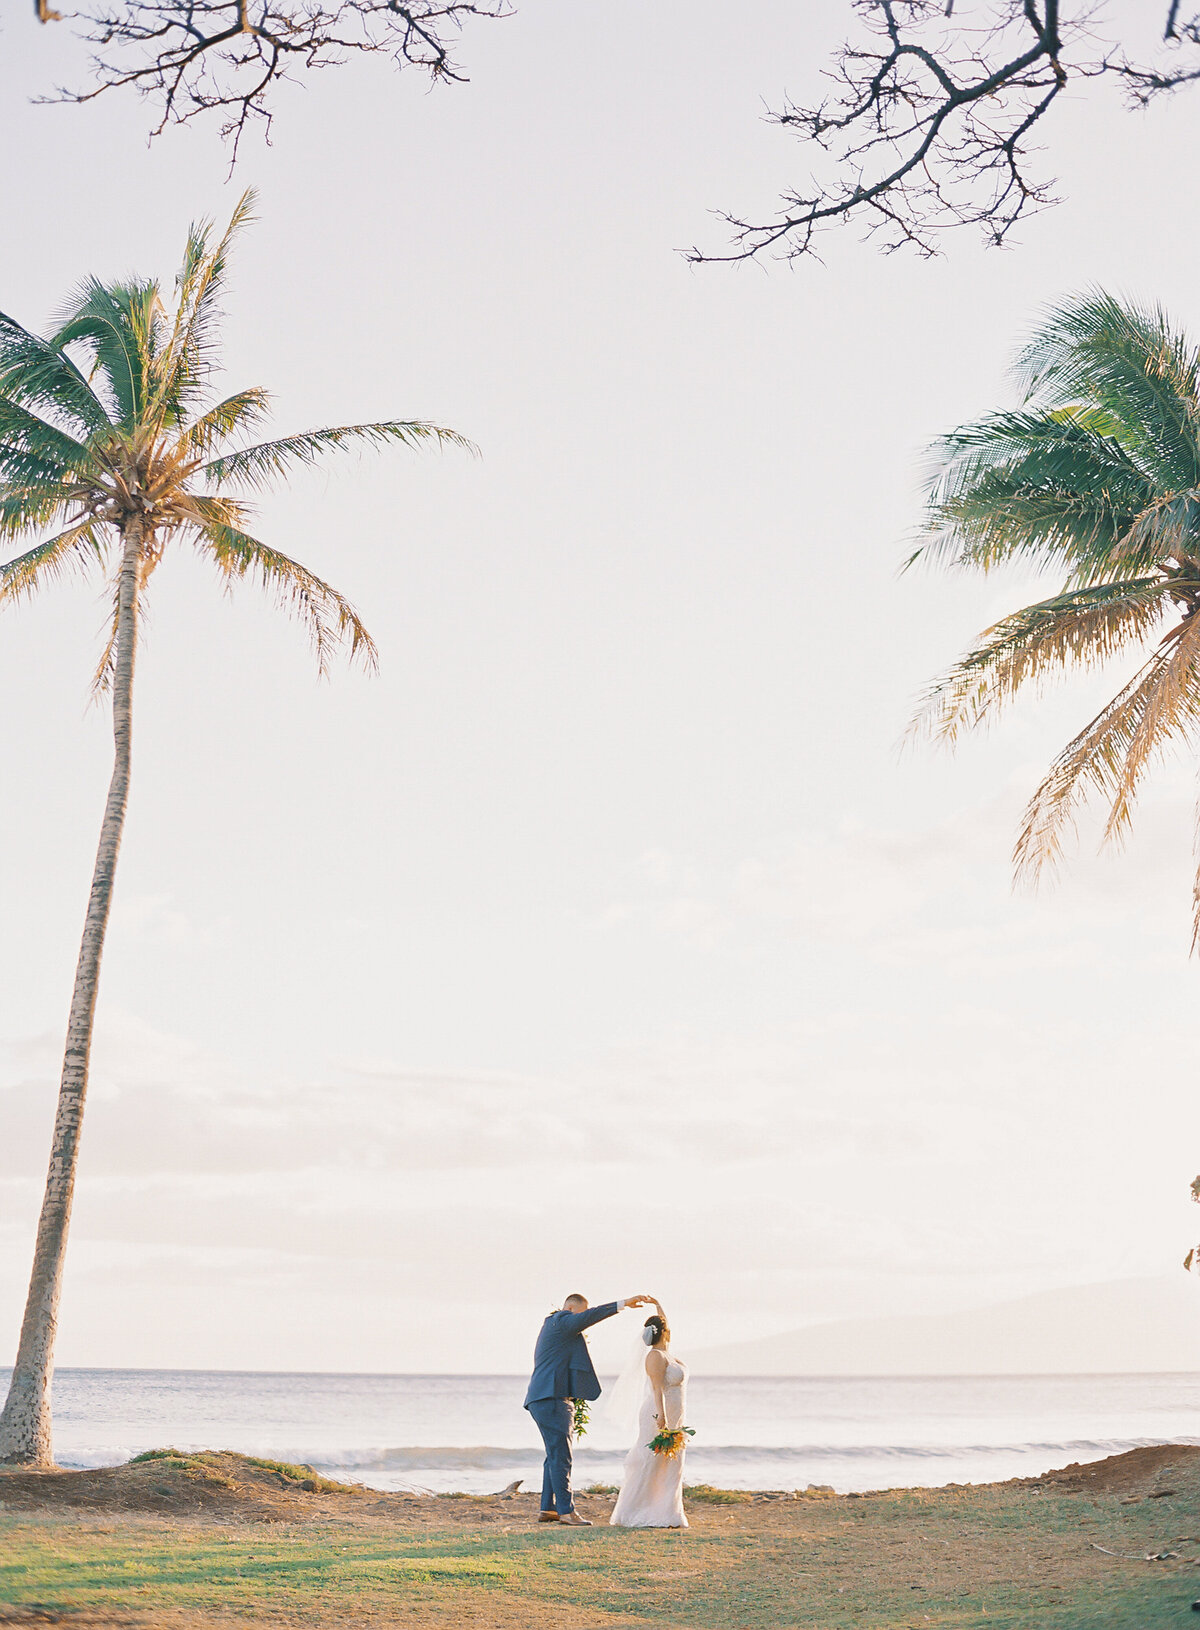 Maui Love Weddings and Events Maui Hawaii Full Service Wedding Planning Coordinating Event Design Company Destination Wedding 26